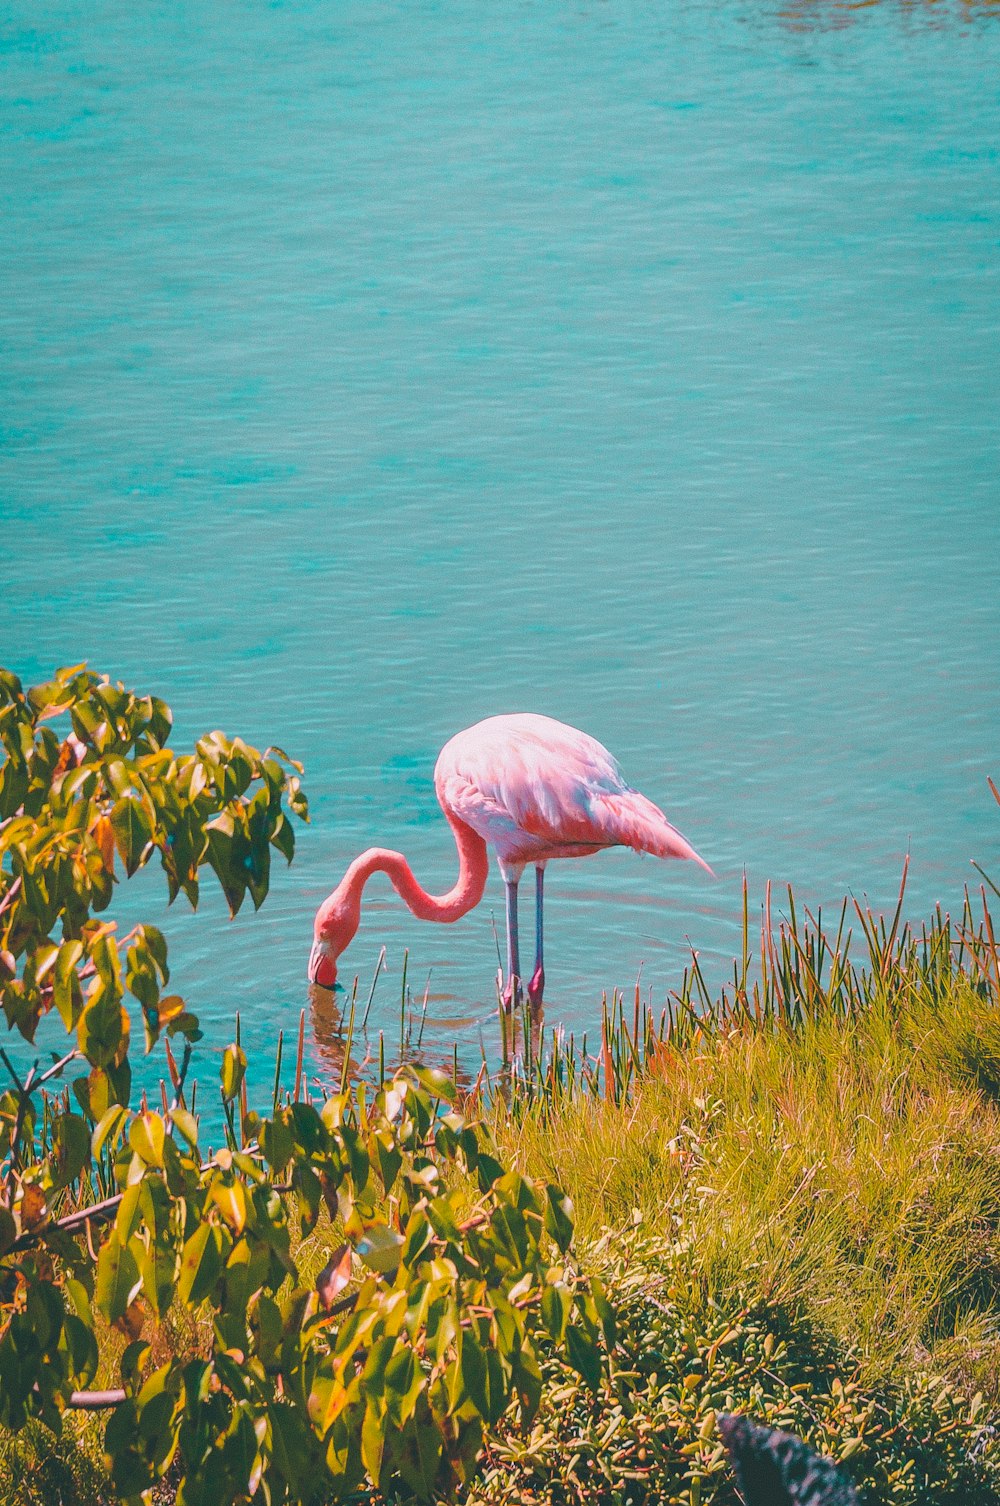 pink flamingo near grass field